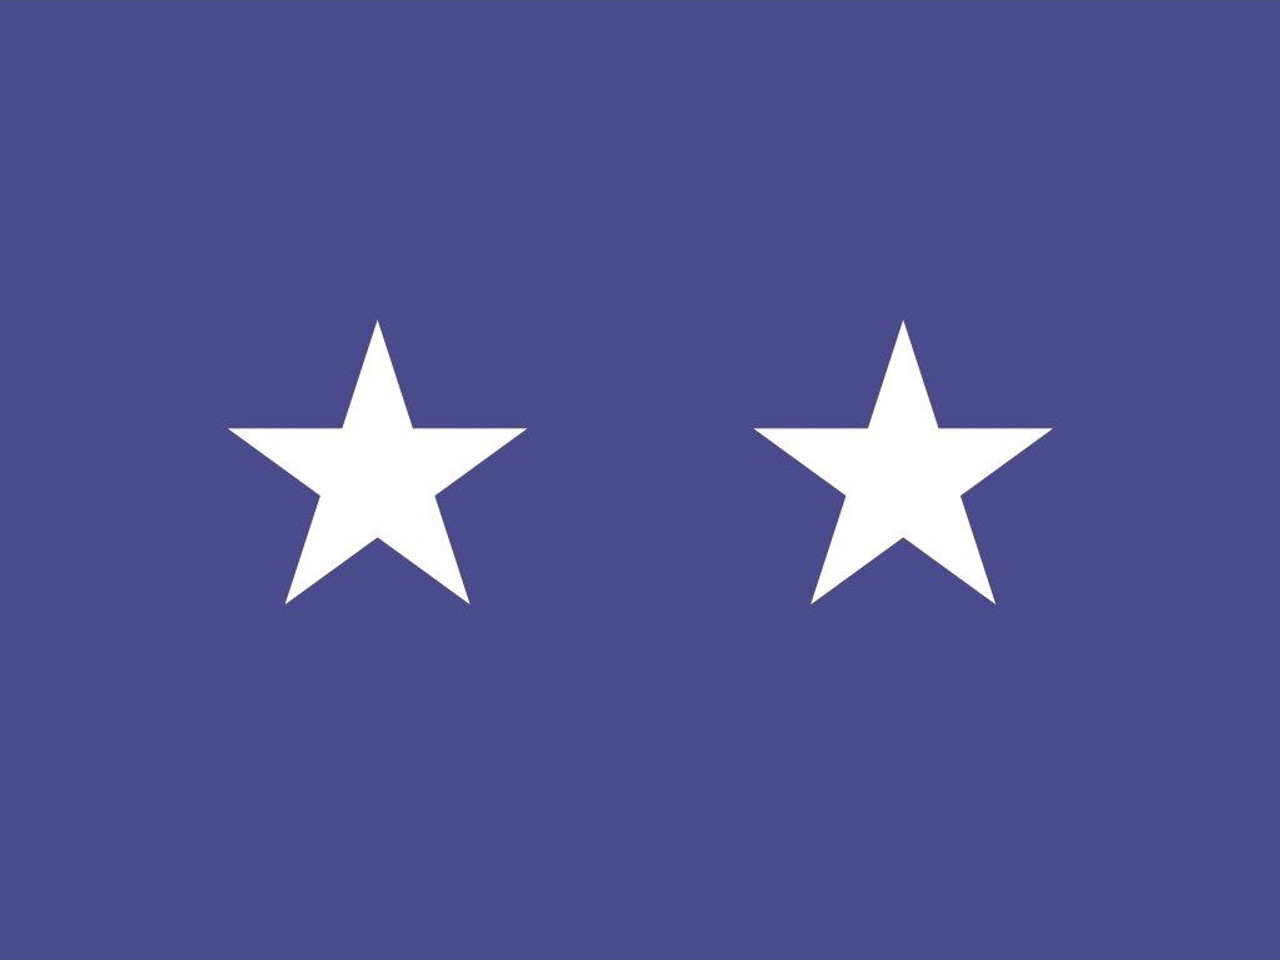 Air Force Major General Flag, 2 Star Nylon Applique with Pole Hem, Size 4'4" x 5'6", GAF2104053